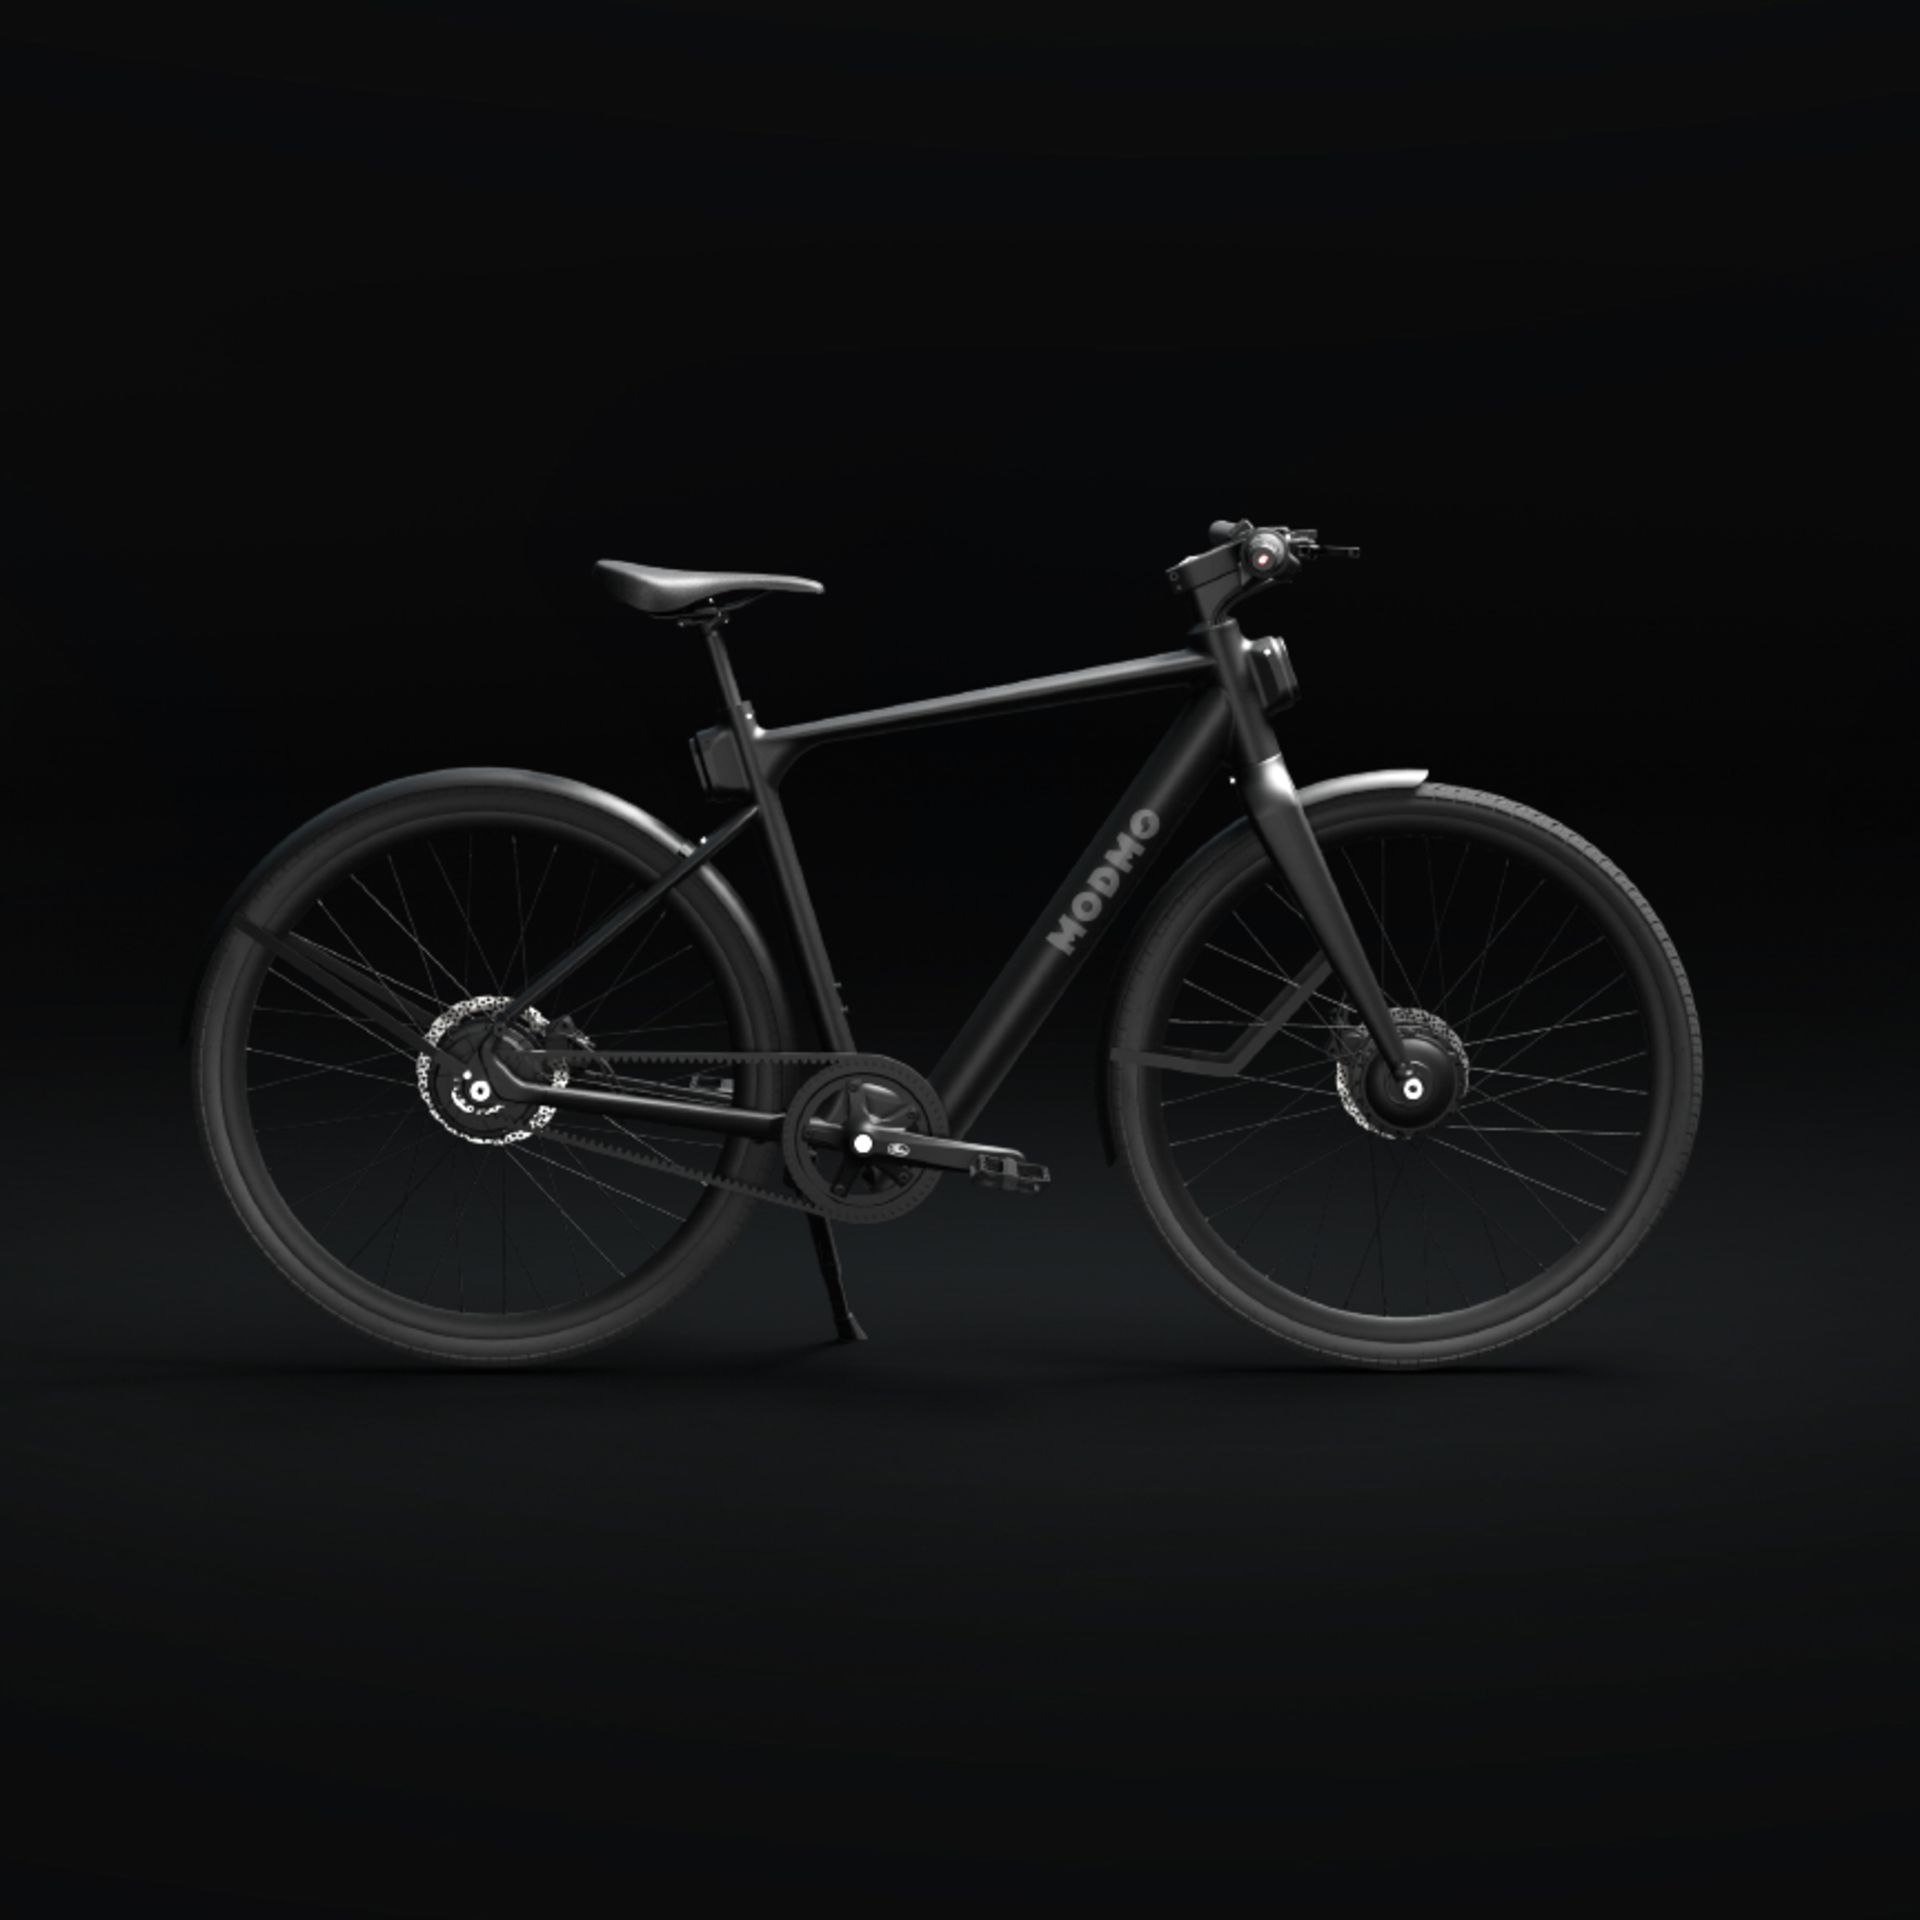 Modmo Saigon+ Electric Bicycle - RRP £2800 - Size L (Rider 175-190cm) - Image 4 of 15